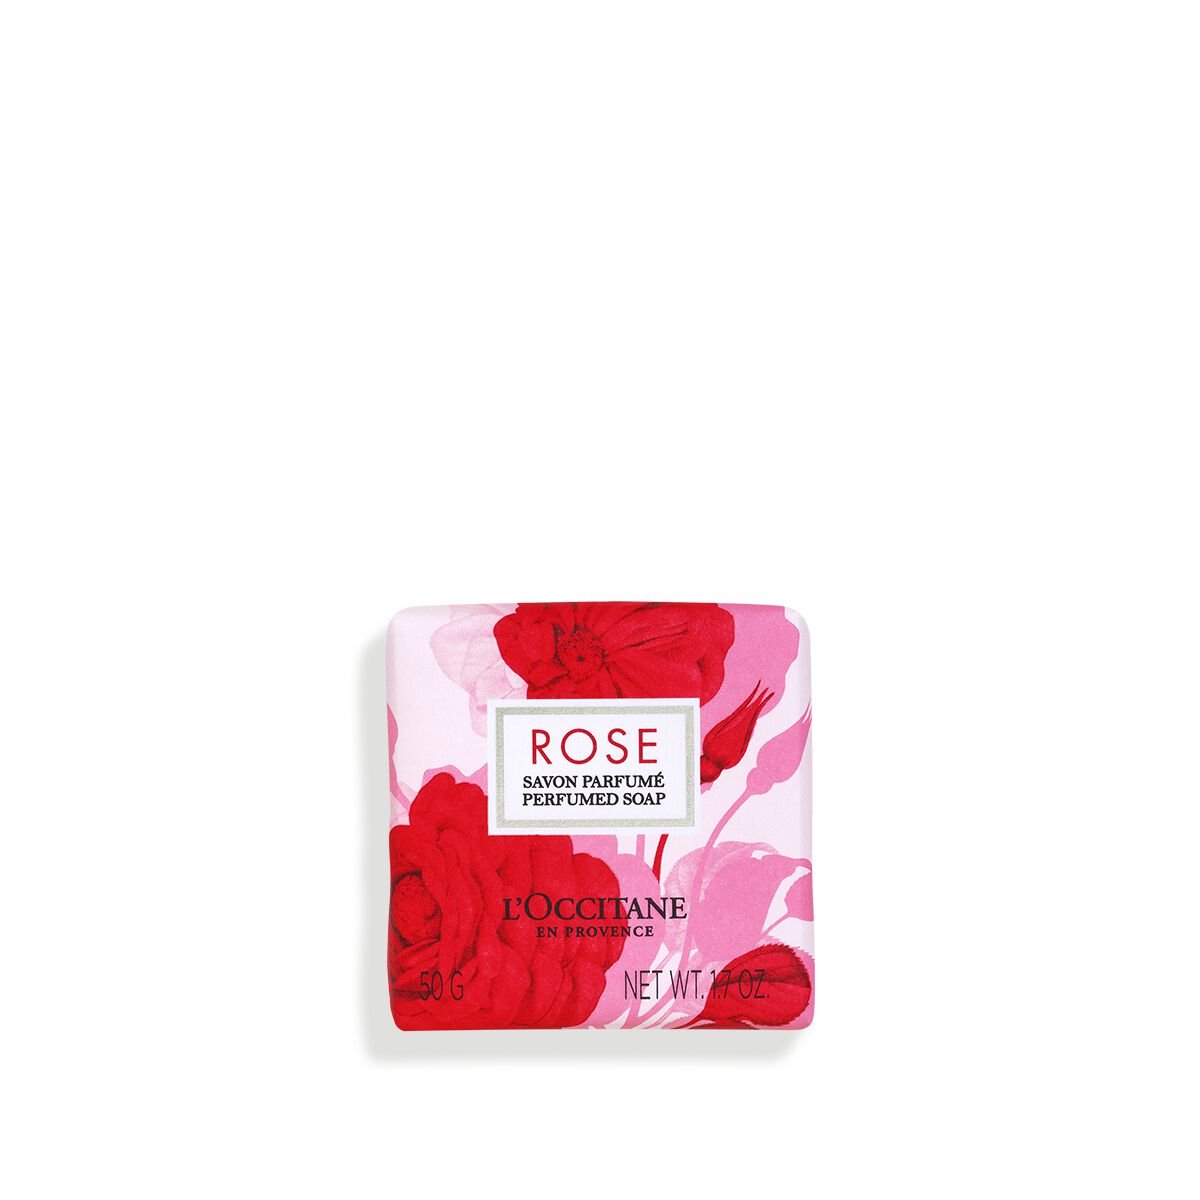 L'occitane Rose Perfumed Soap